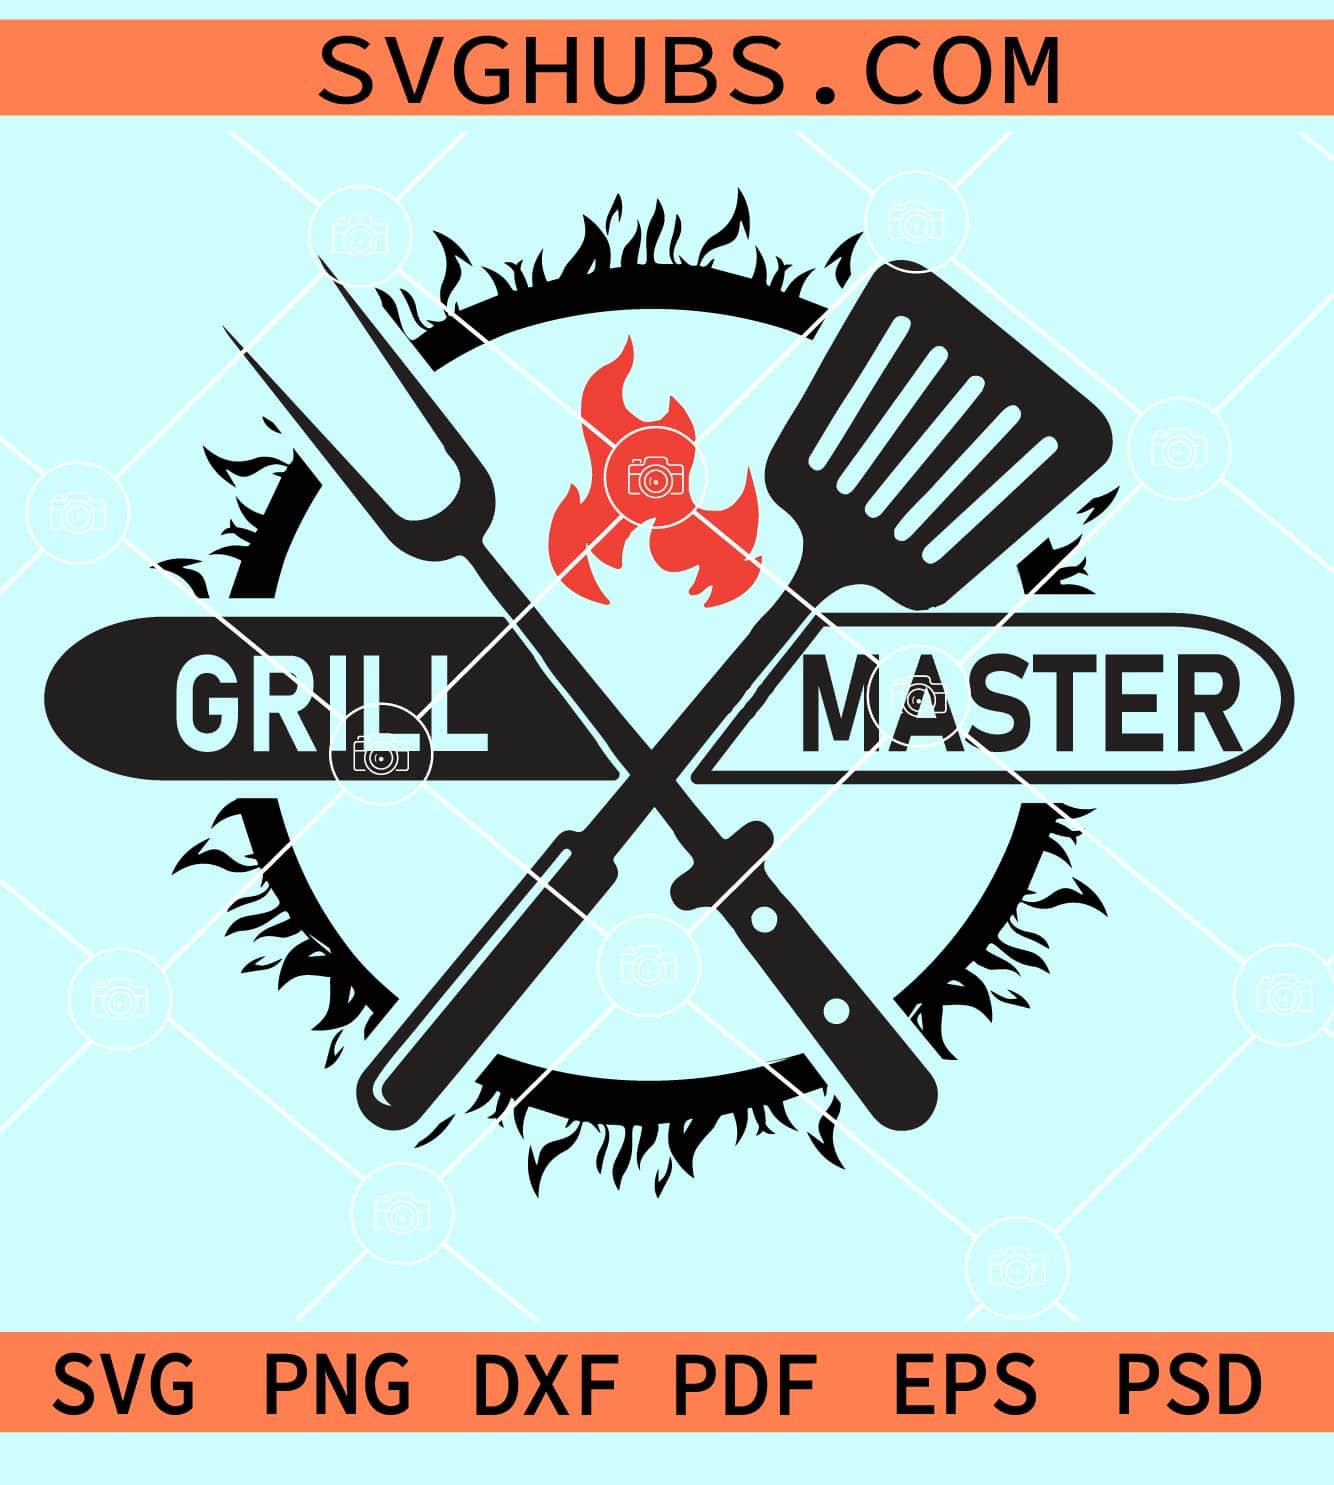 BBQ Grill Utensils svg, Cooking svg, Grilling Spatula & Fork svg, BBQ Decal  svg, Men Barbecue svg, Grill Decor svg| Includes svg dxf jpg png